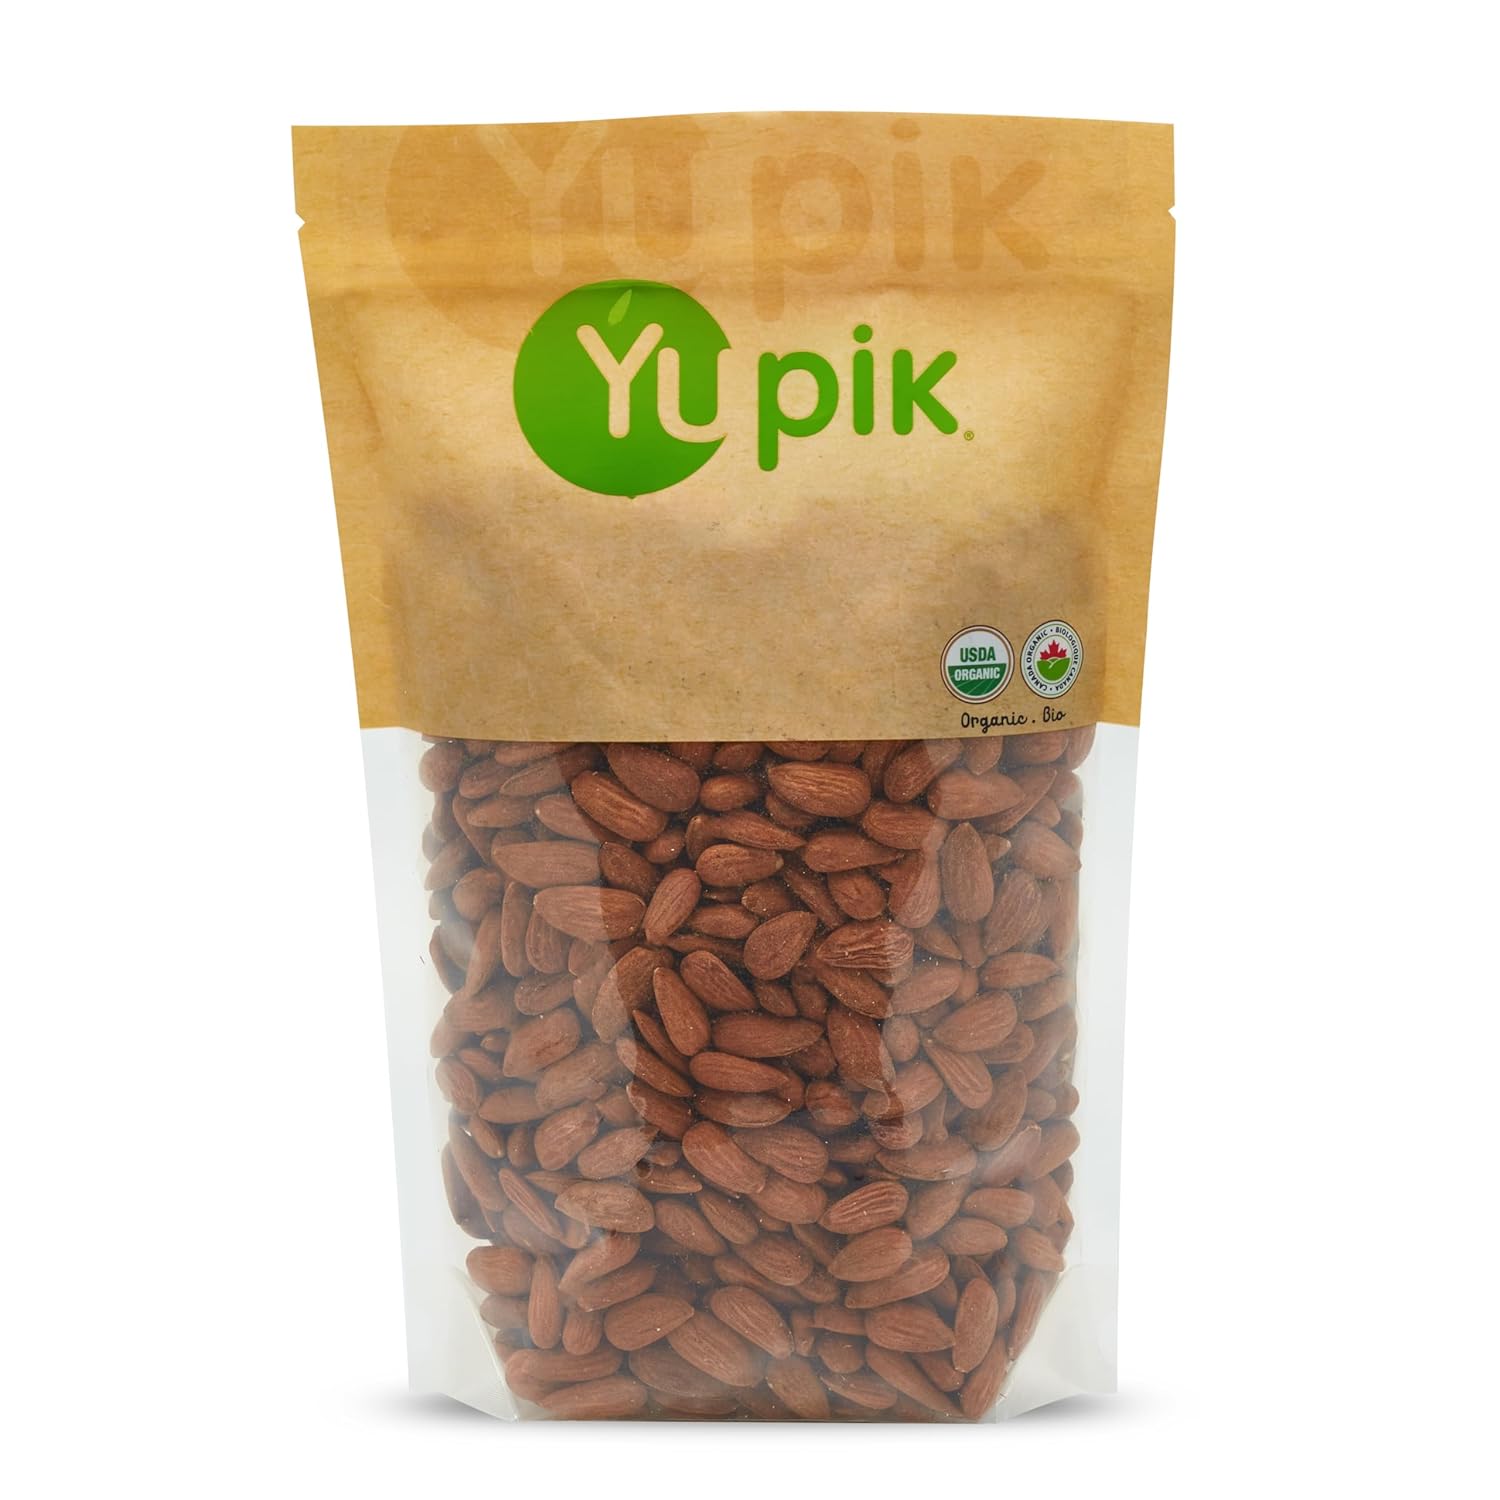 Yupik Organic Raw European Almonds, 2.2 lb, Non-Gmo, Vegan, Gluten-Free, Good Source Of Protein, Fiber, Iron & Calcium, Low In Carb, Pack of 1